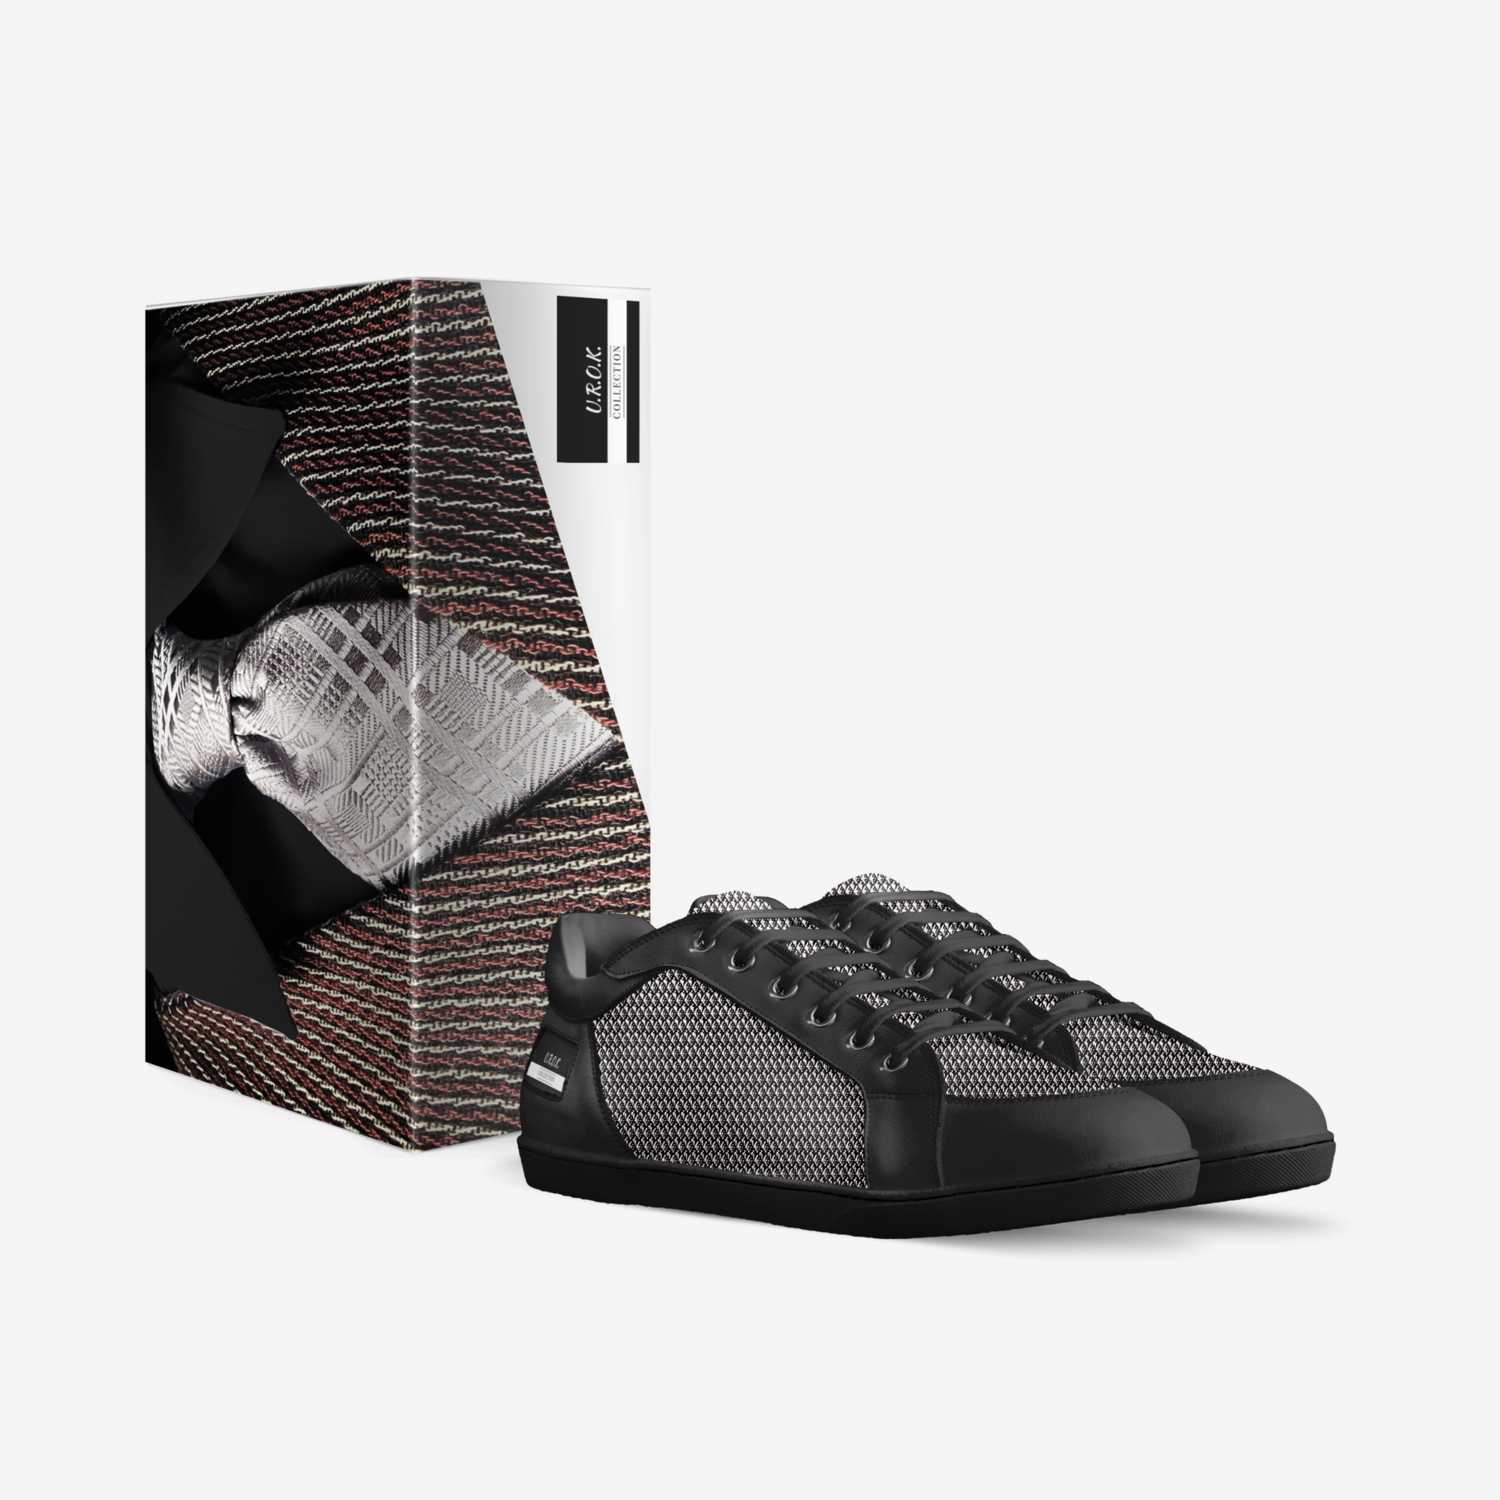 PILLAR custom made in Italy shoes by Joseph Pillar | Box view